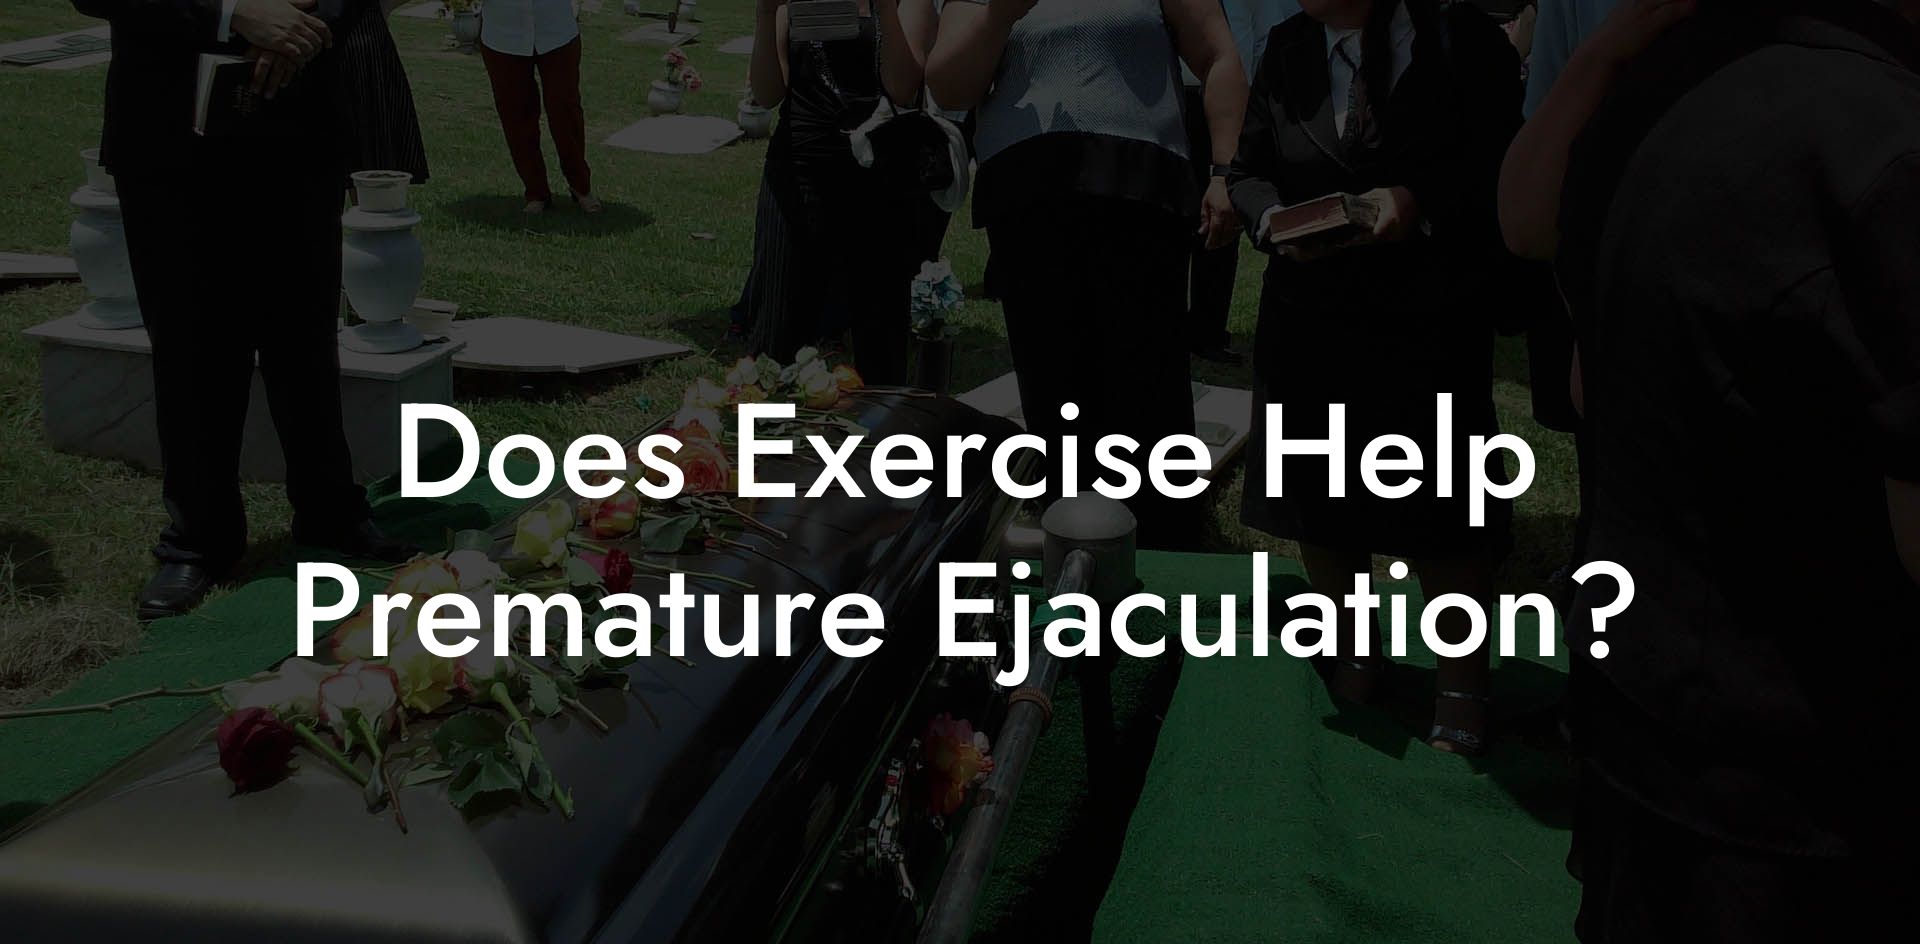 Does Exercise Help Premature Ejaculation?